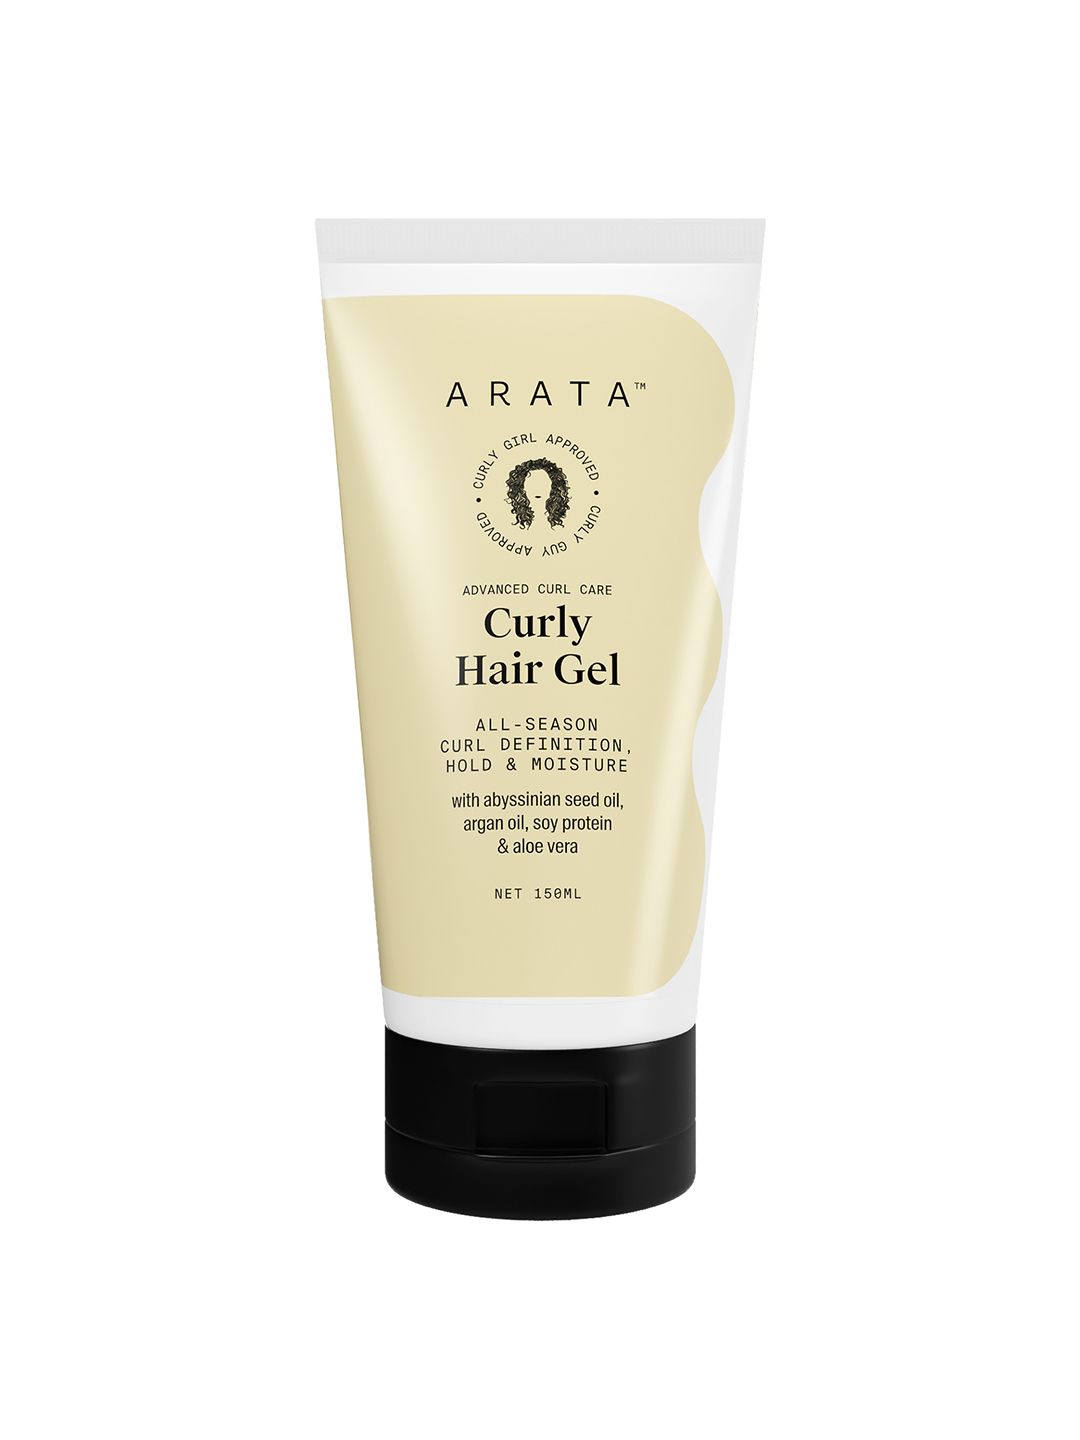 ARATA Advanced Vegan All-Season Curl Care Definition Hold & Moisture Hair Gel 150 ml Price in India